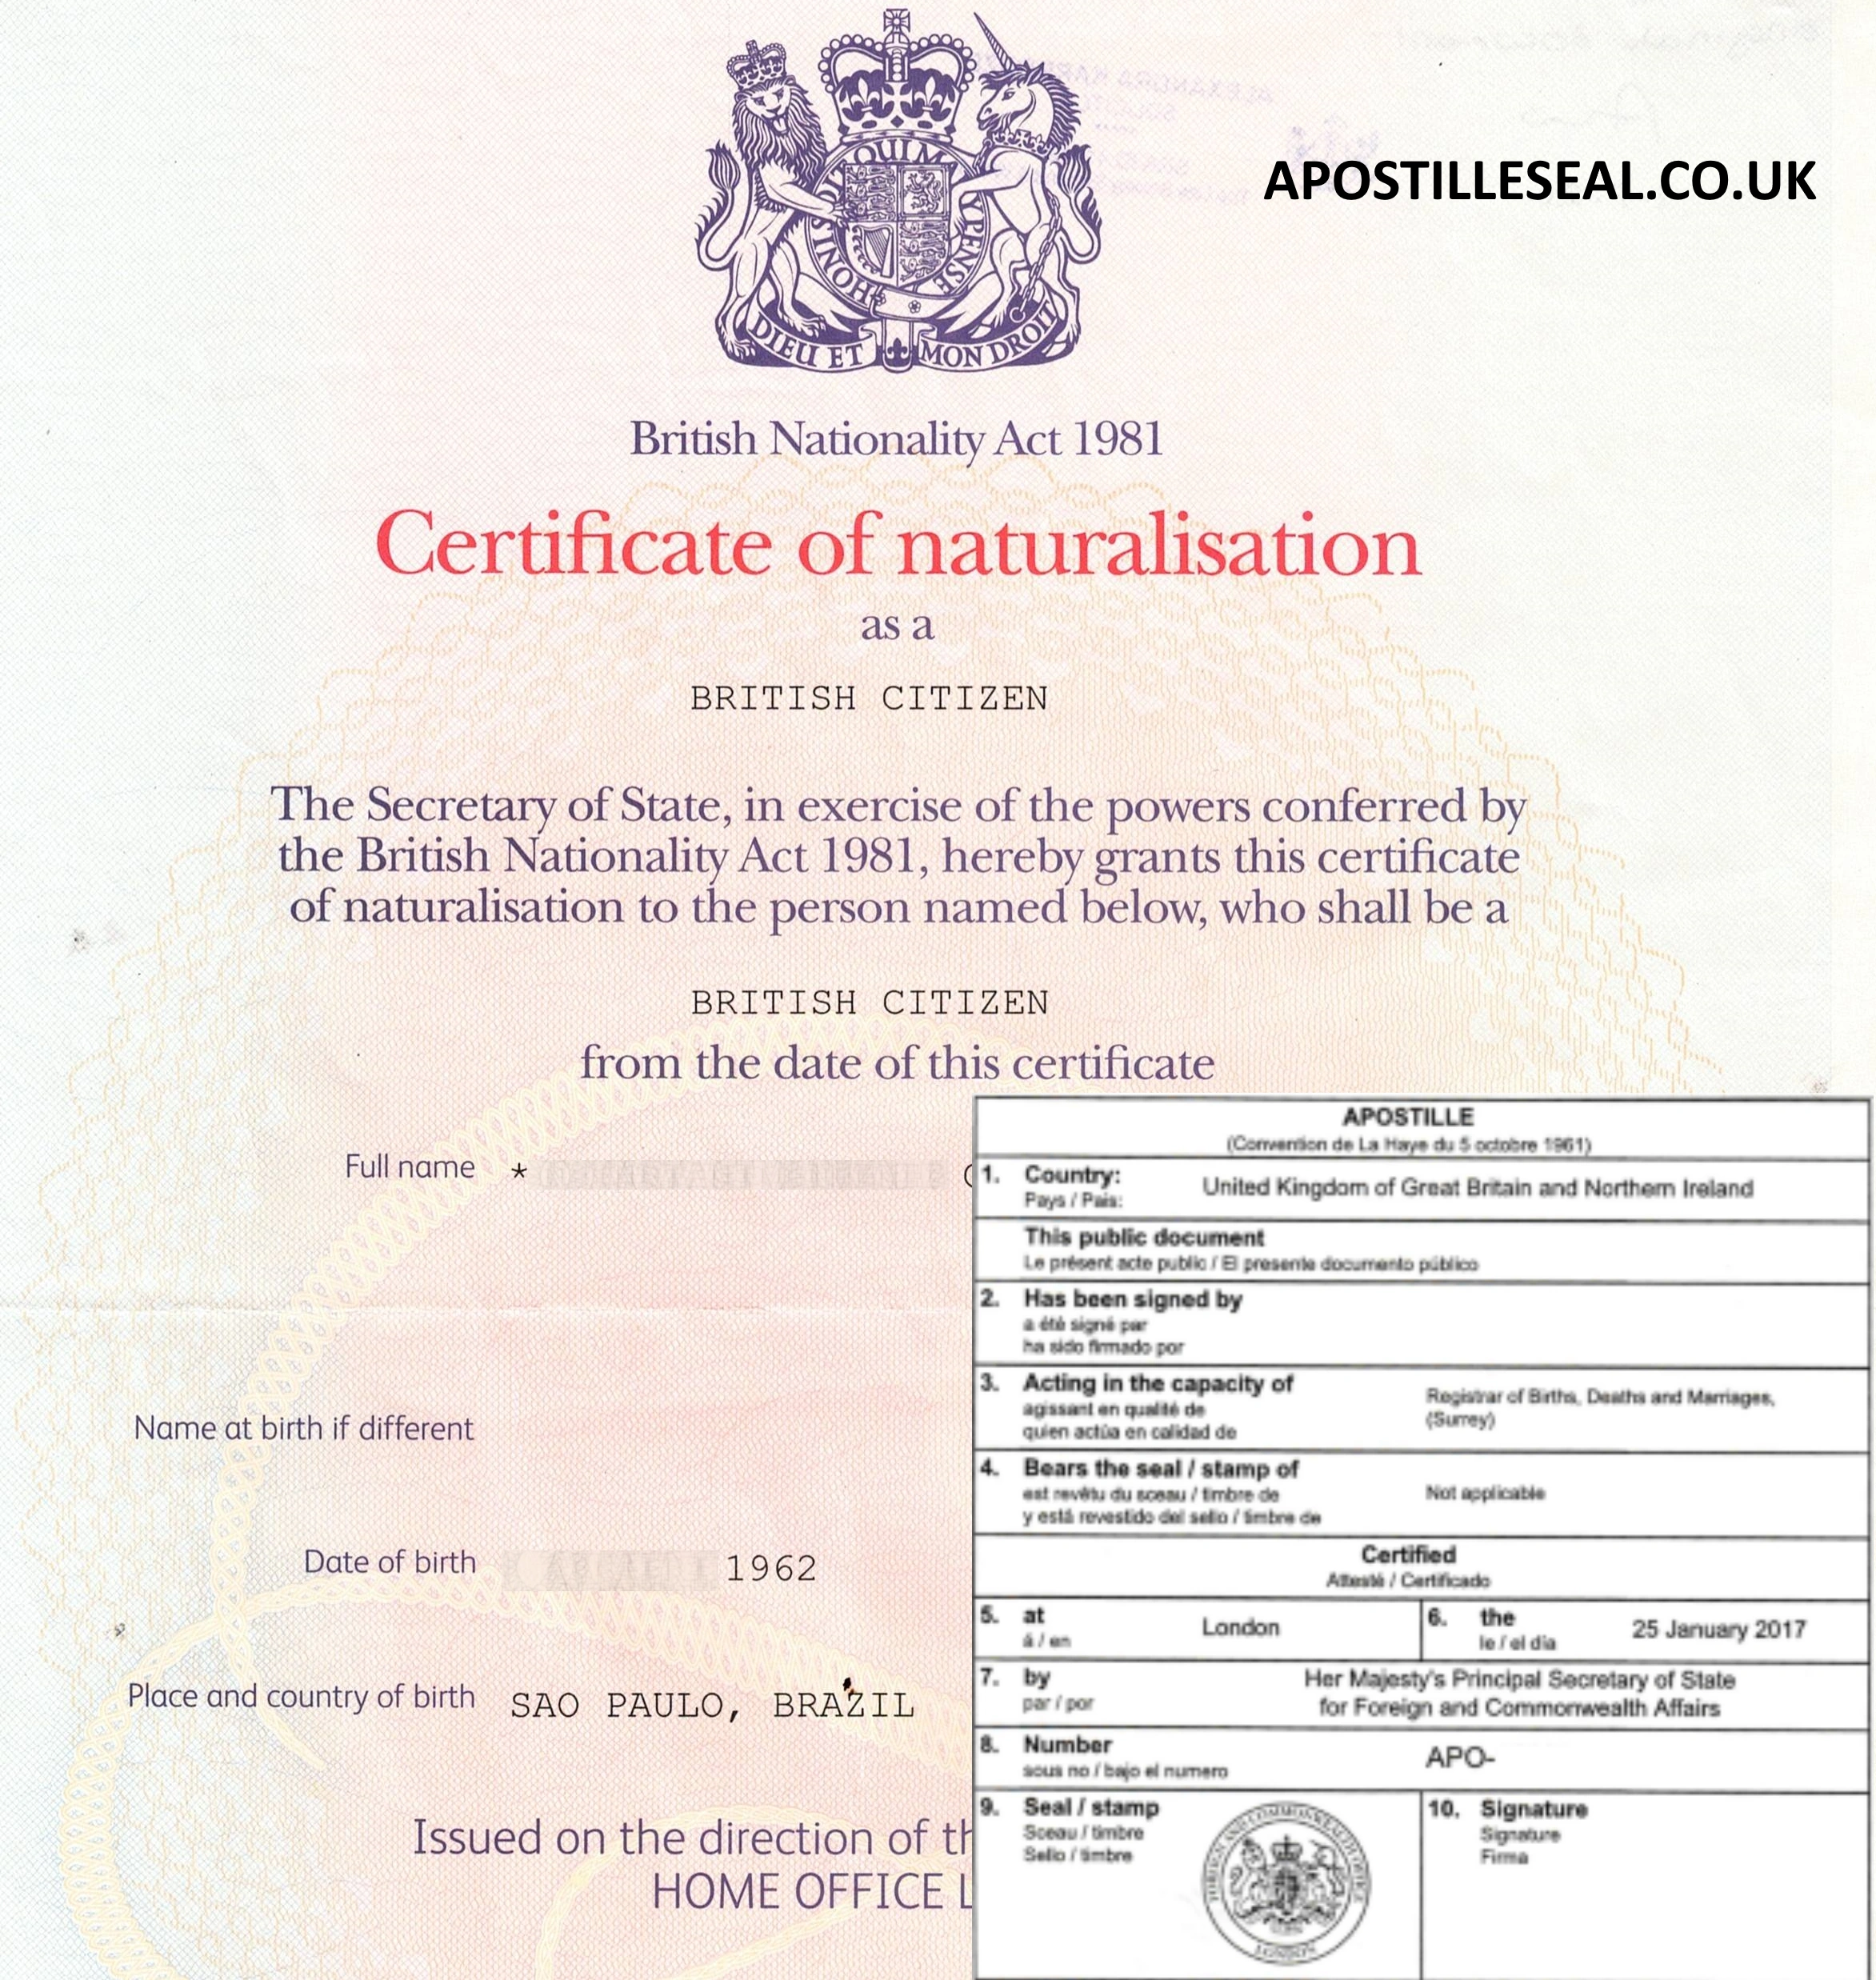 Certificate of Naturalisation Apostille